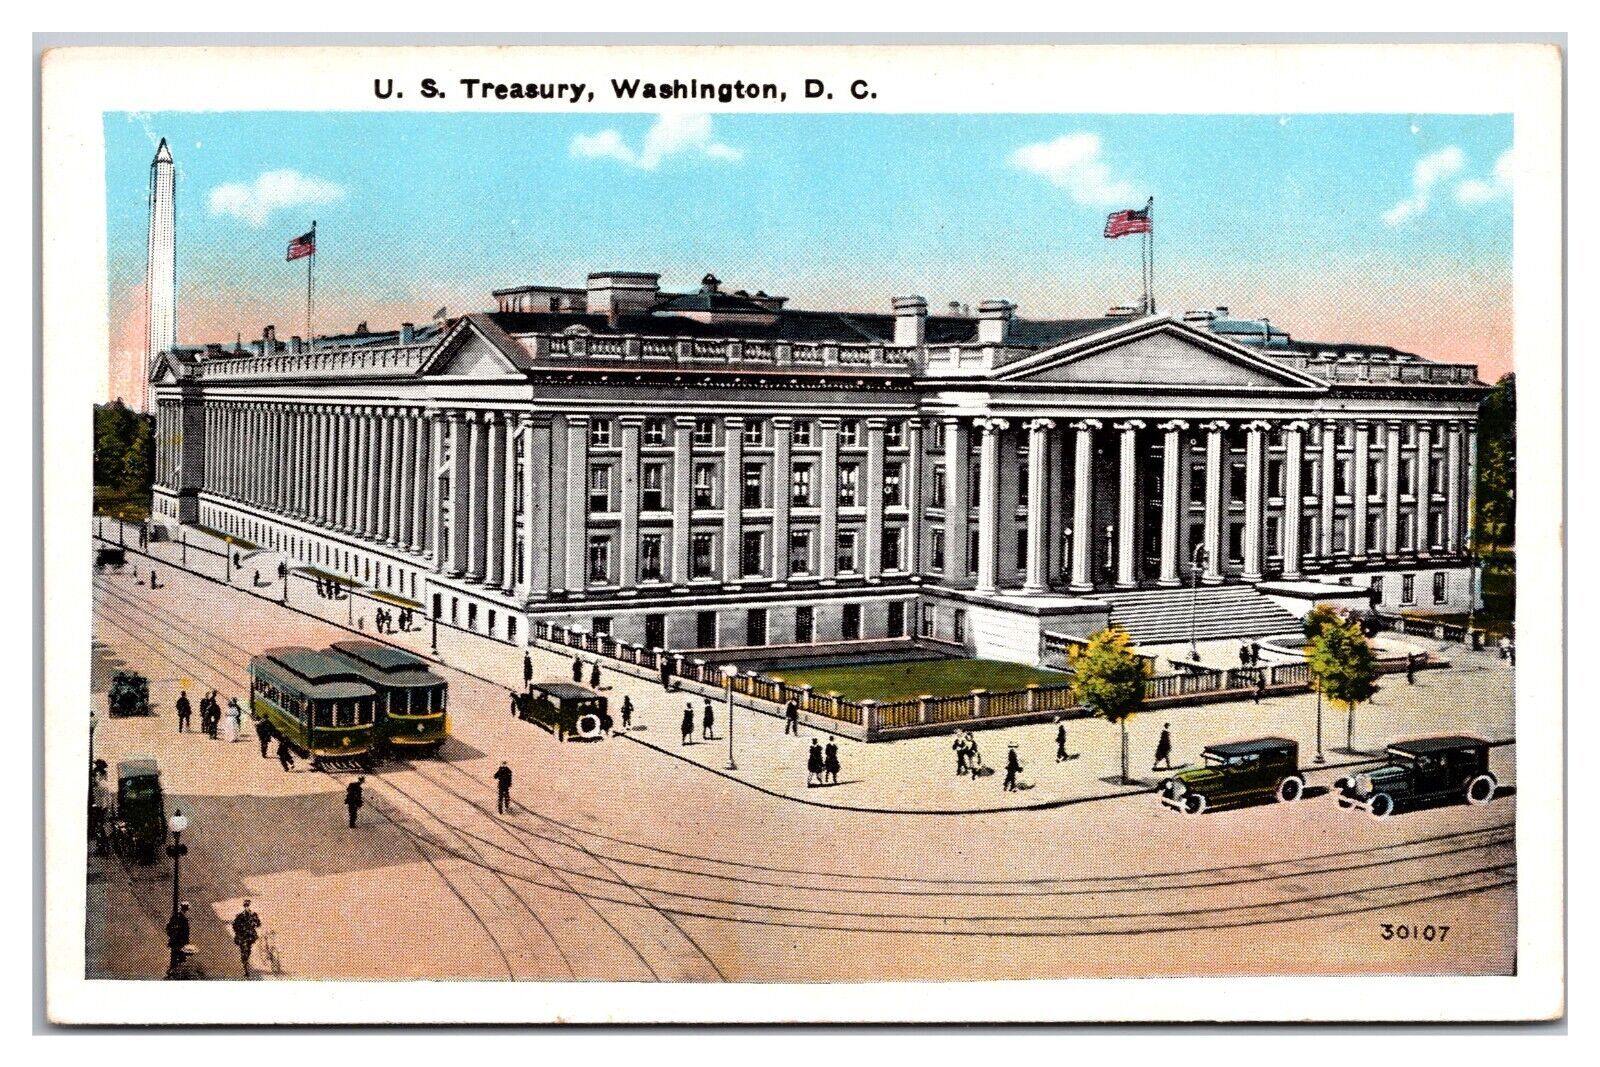 U.S Treasury, Washington D.C. Postcard